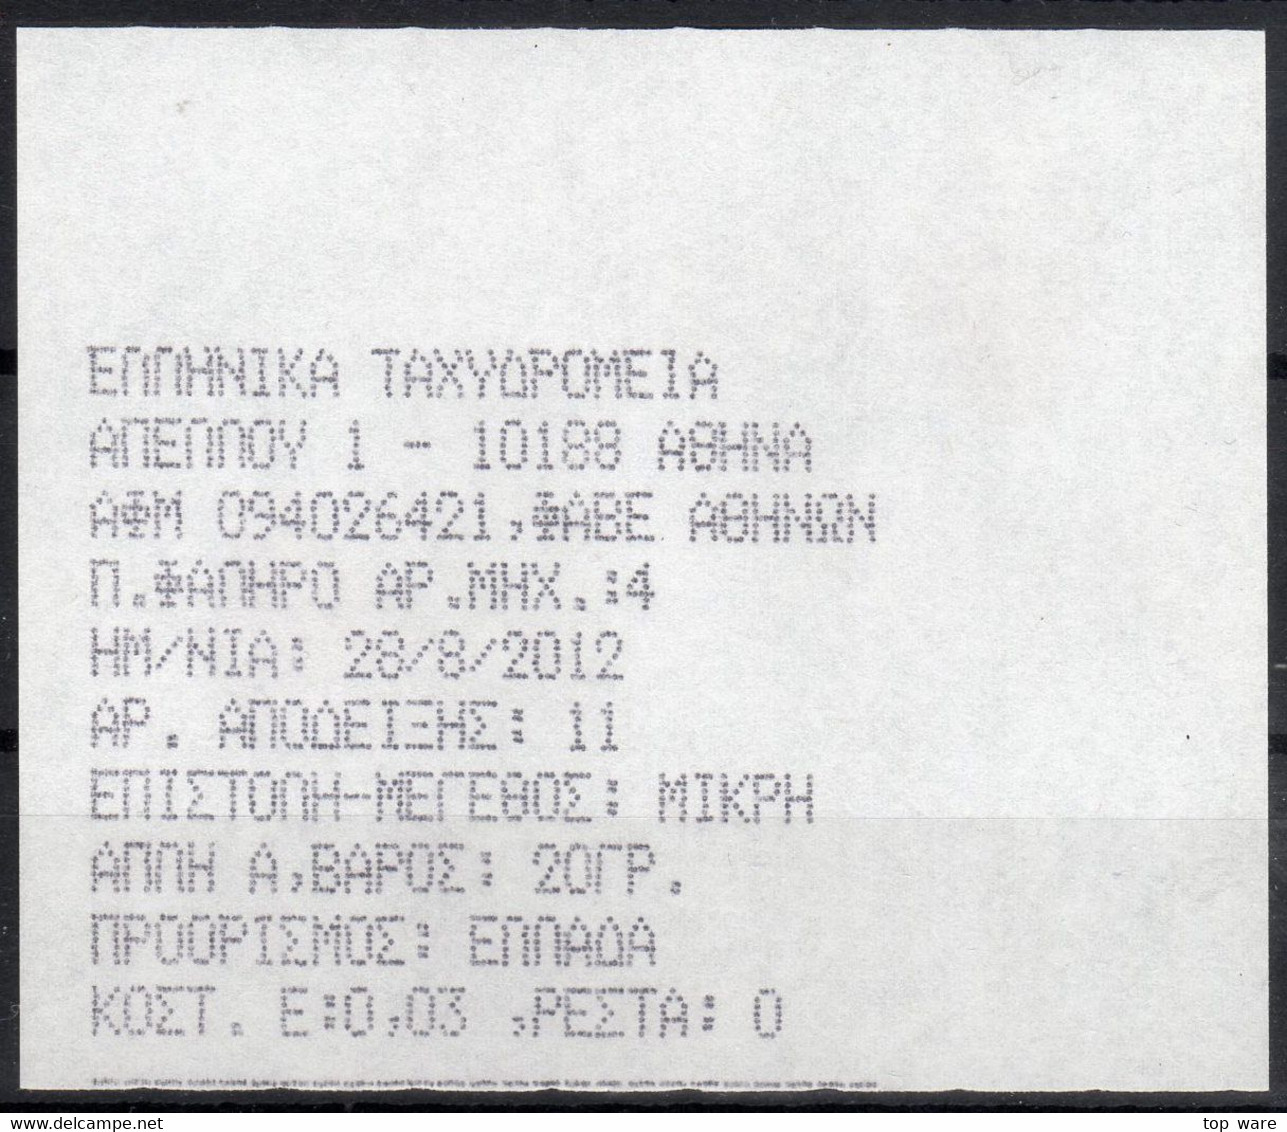 Greece Griechenland HELLAS ATM 23 Temple Colums * Red * Euro 0,03 MNH + Receipt * Frama Etiquetas Automatenmarken - Automatenmarken [ATM]